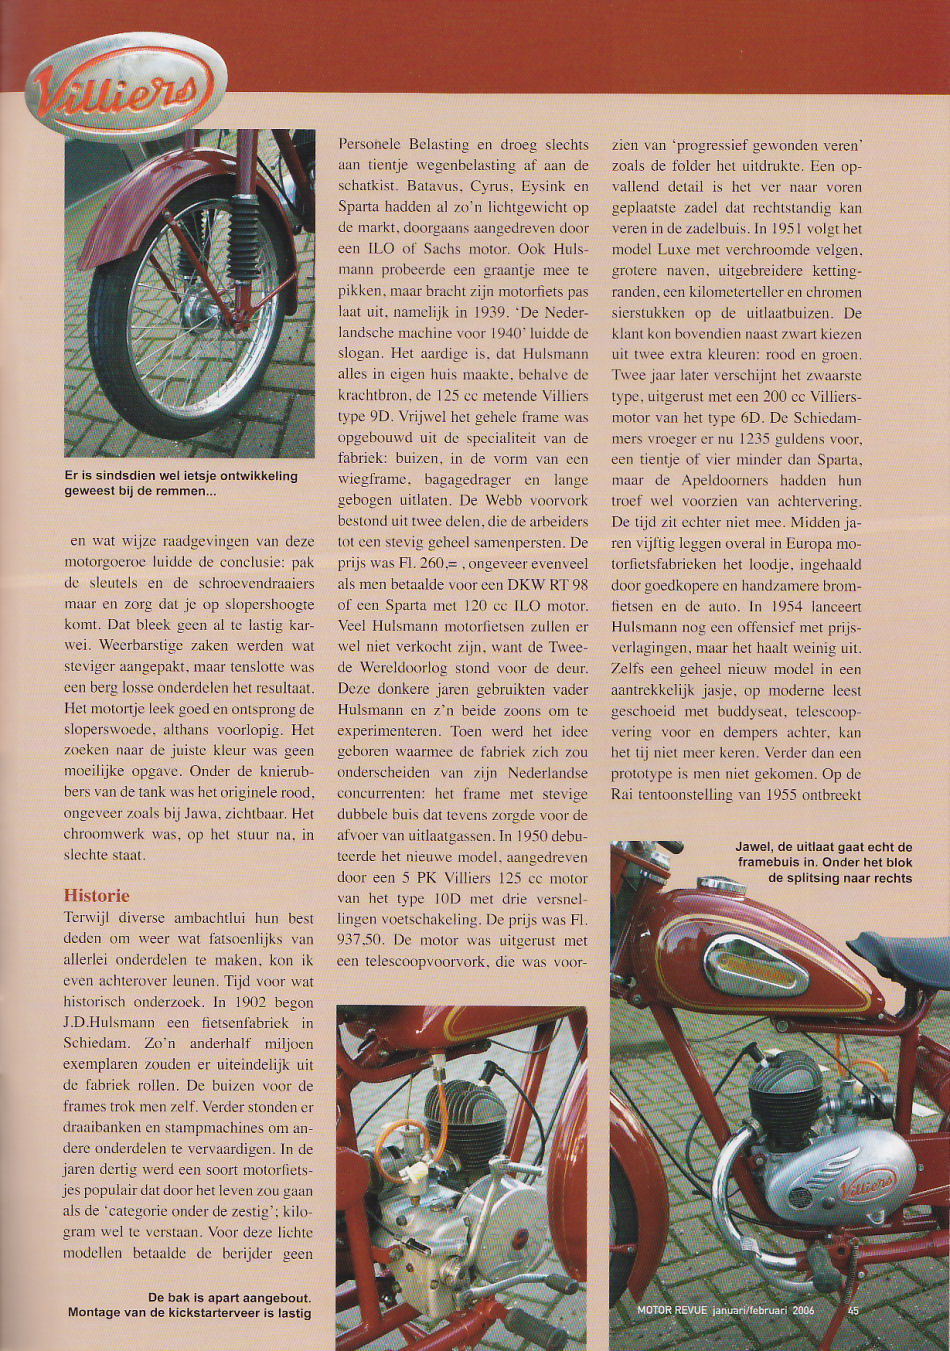 Over Hulsmann - Motor Revue jan/feb 2006